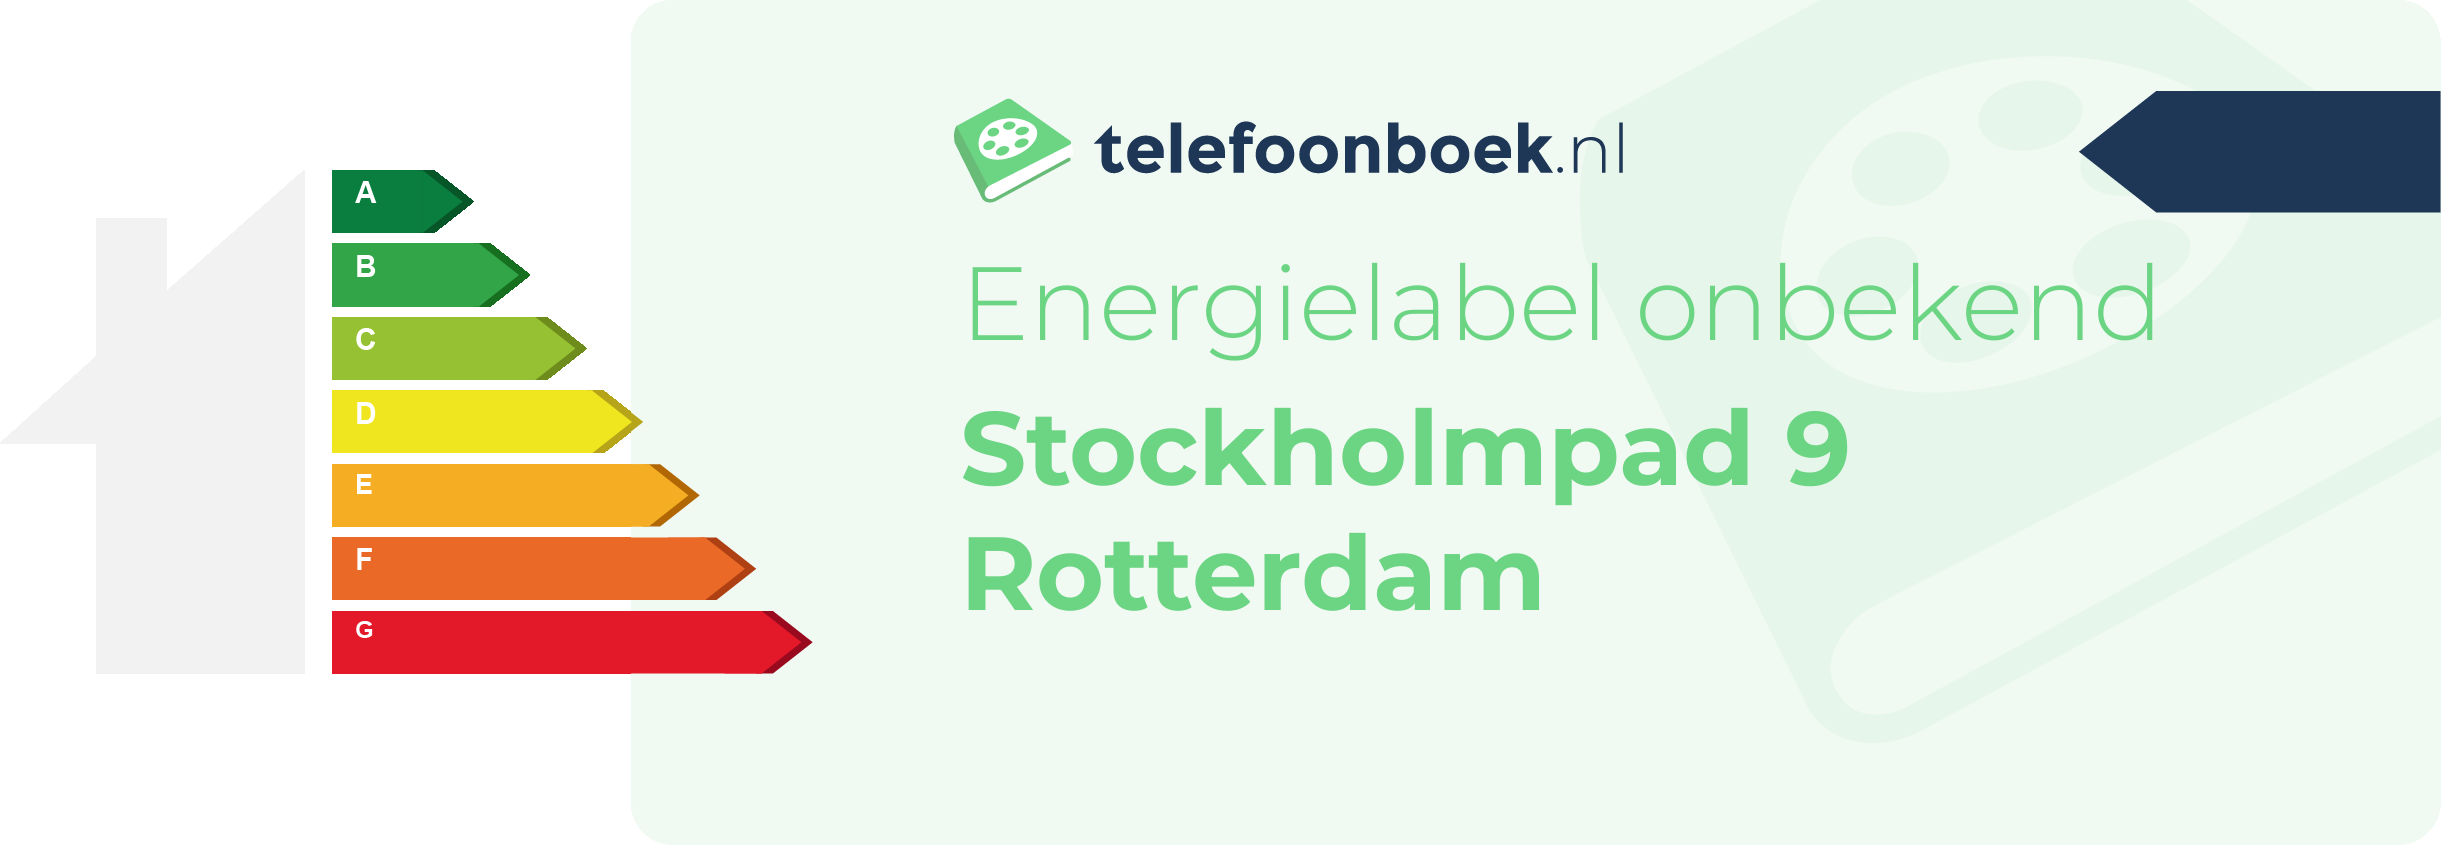 Energielabel Stockholmpad 9 Rotterdam